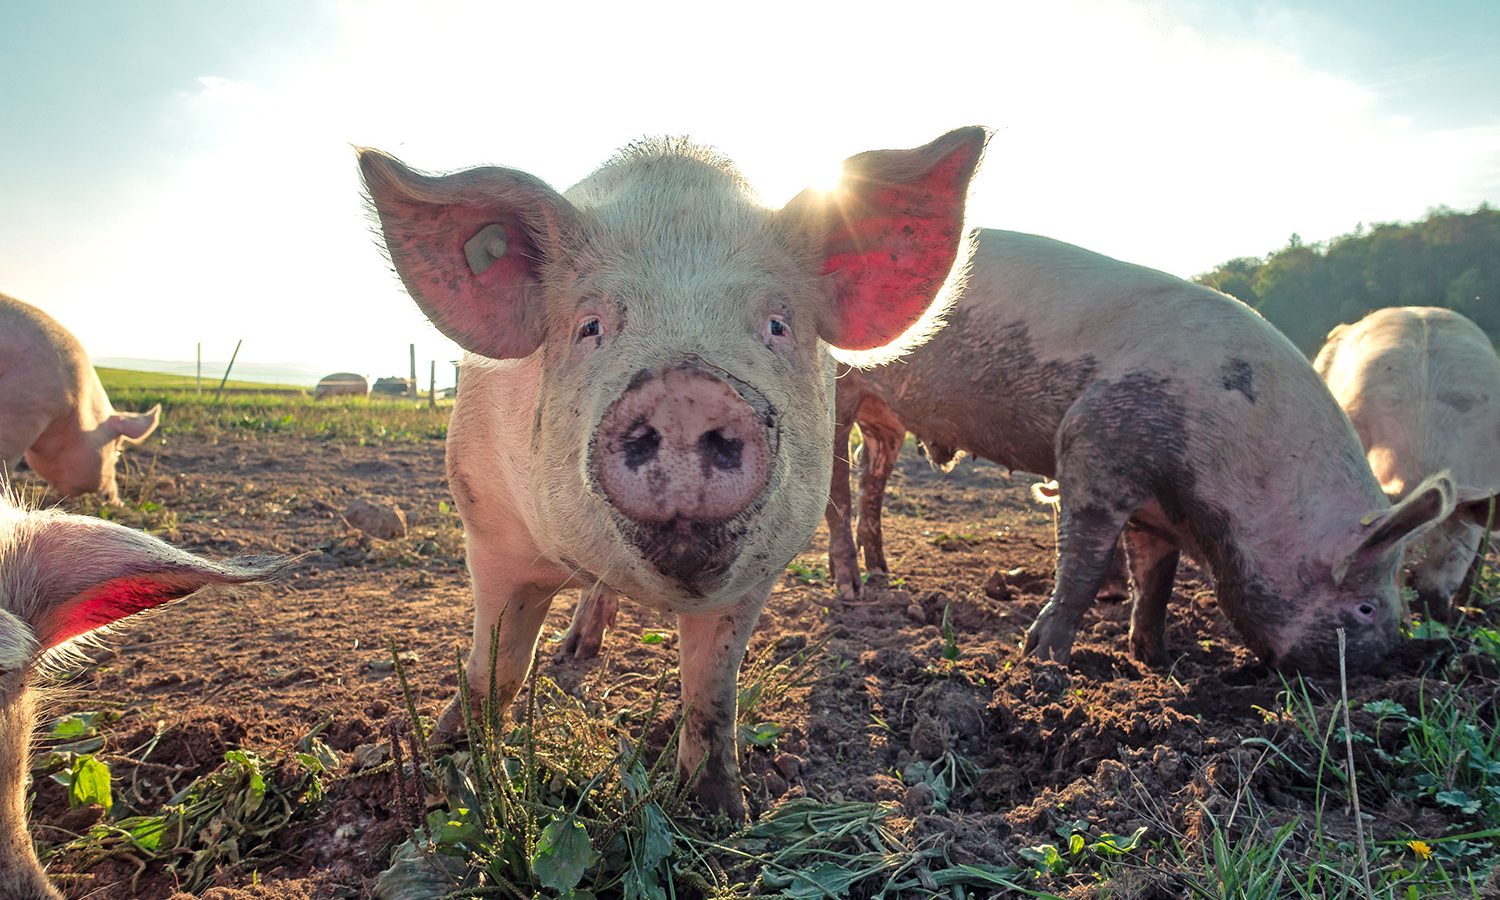 Pig in field - Header for Pork Ingredient